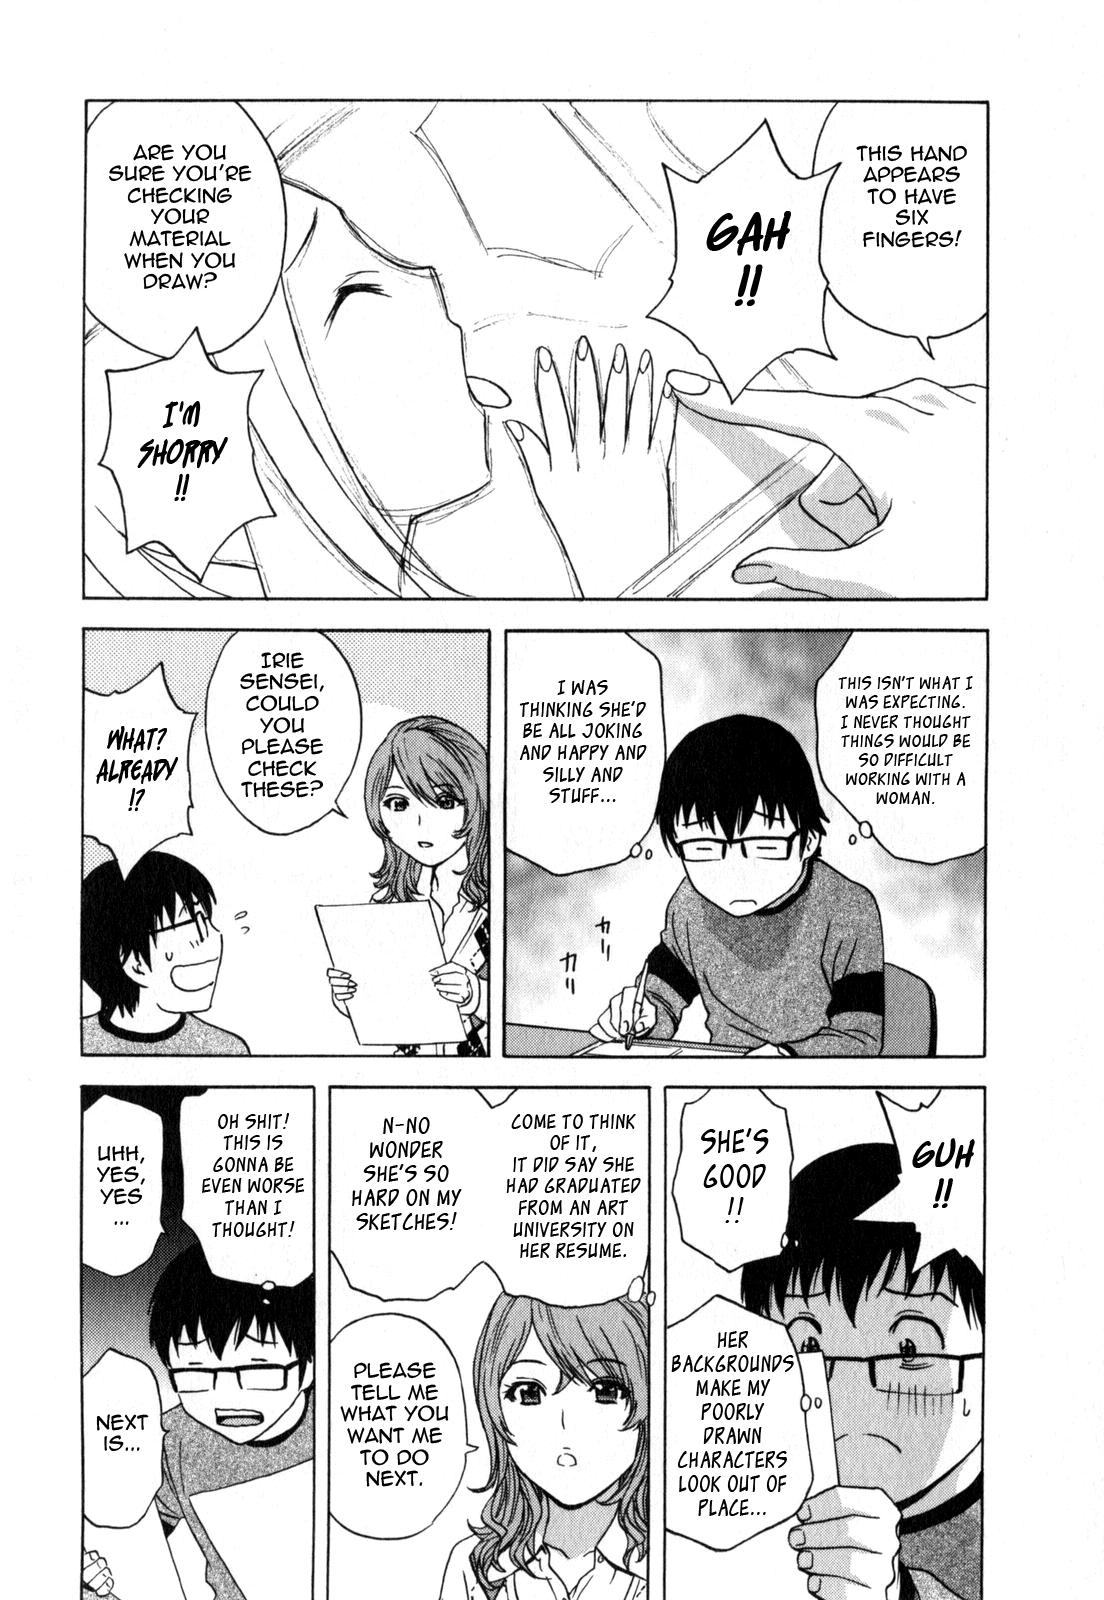 [Hidemaru] Life with Married Women Just Like a Manga 2 - Ch. 1-8 [English] {Tadanohito} 31